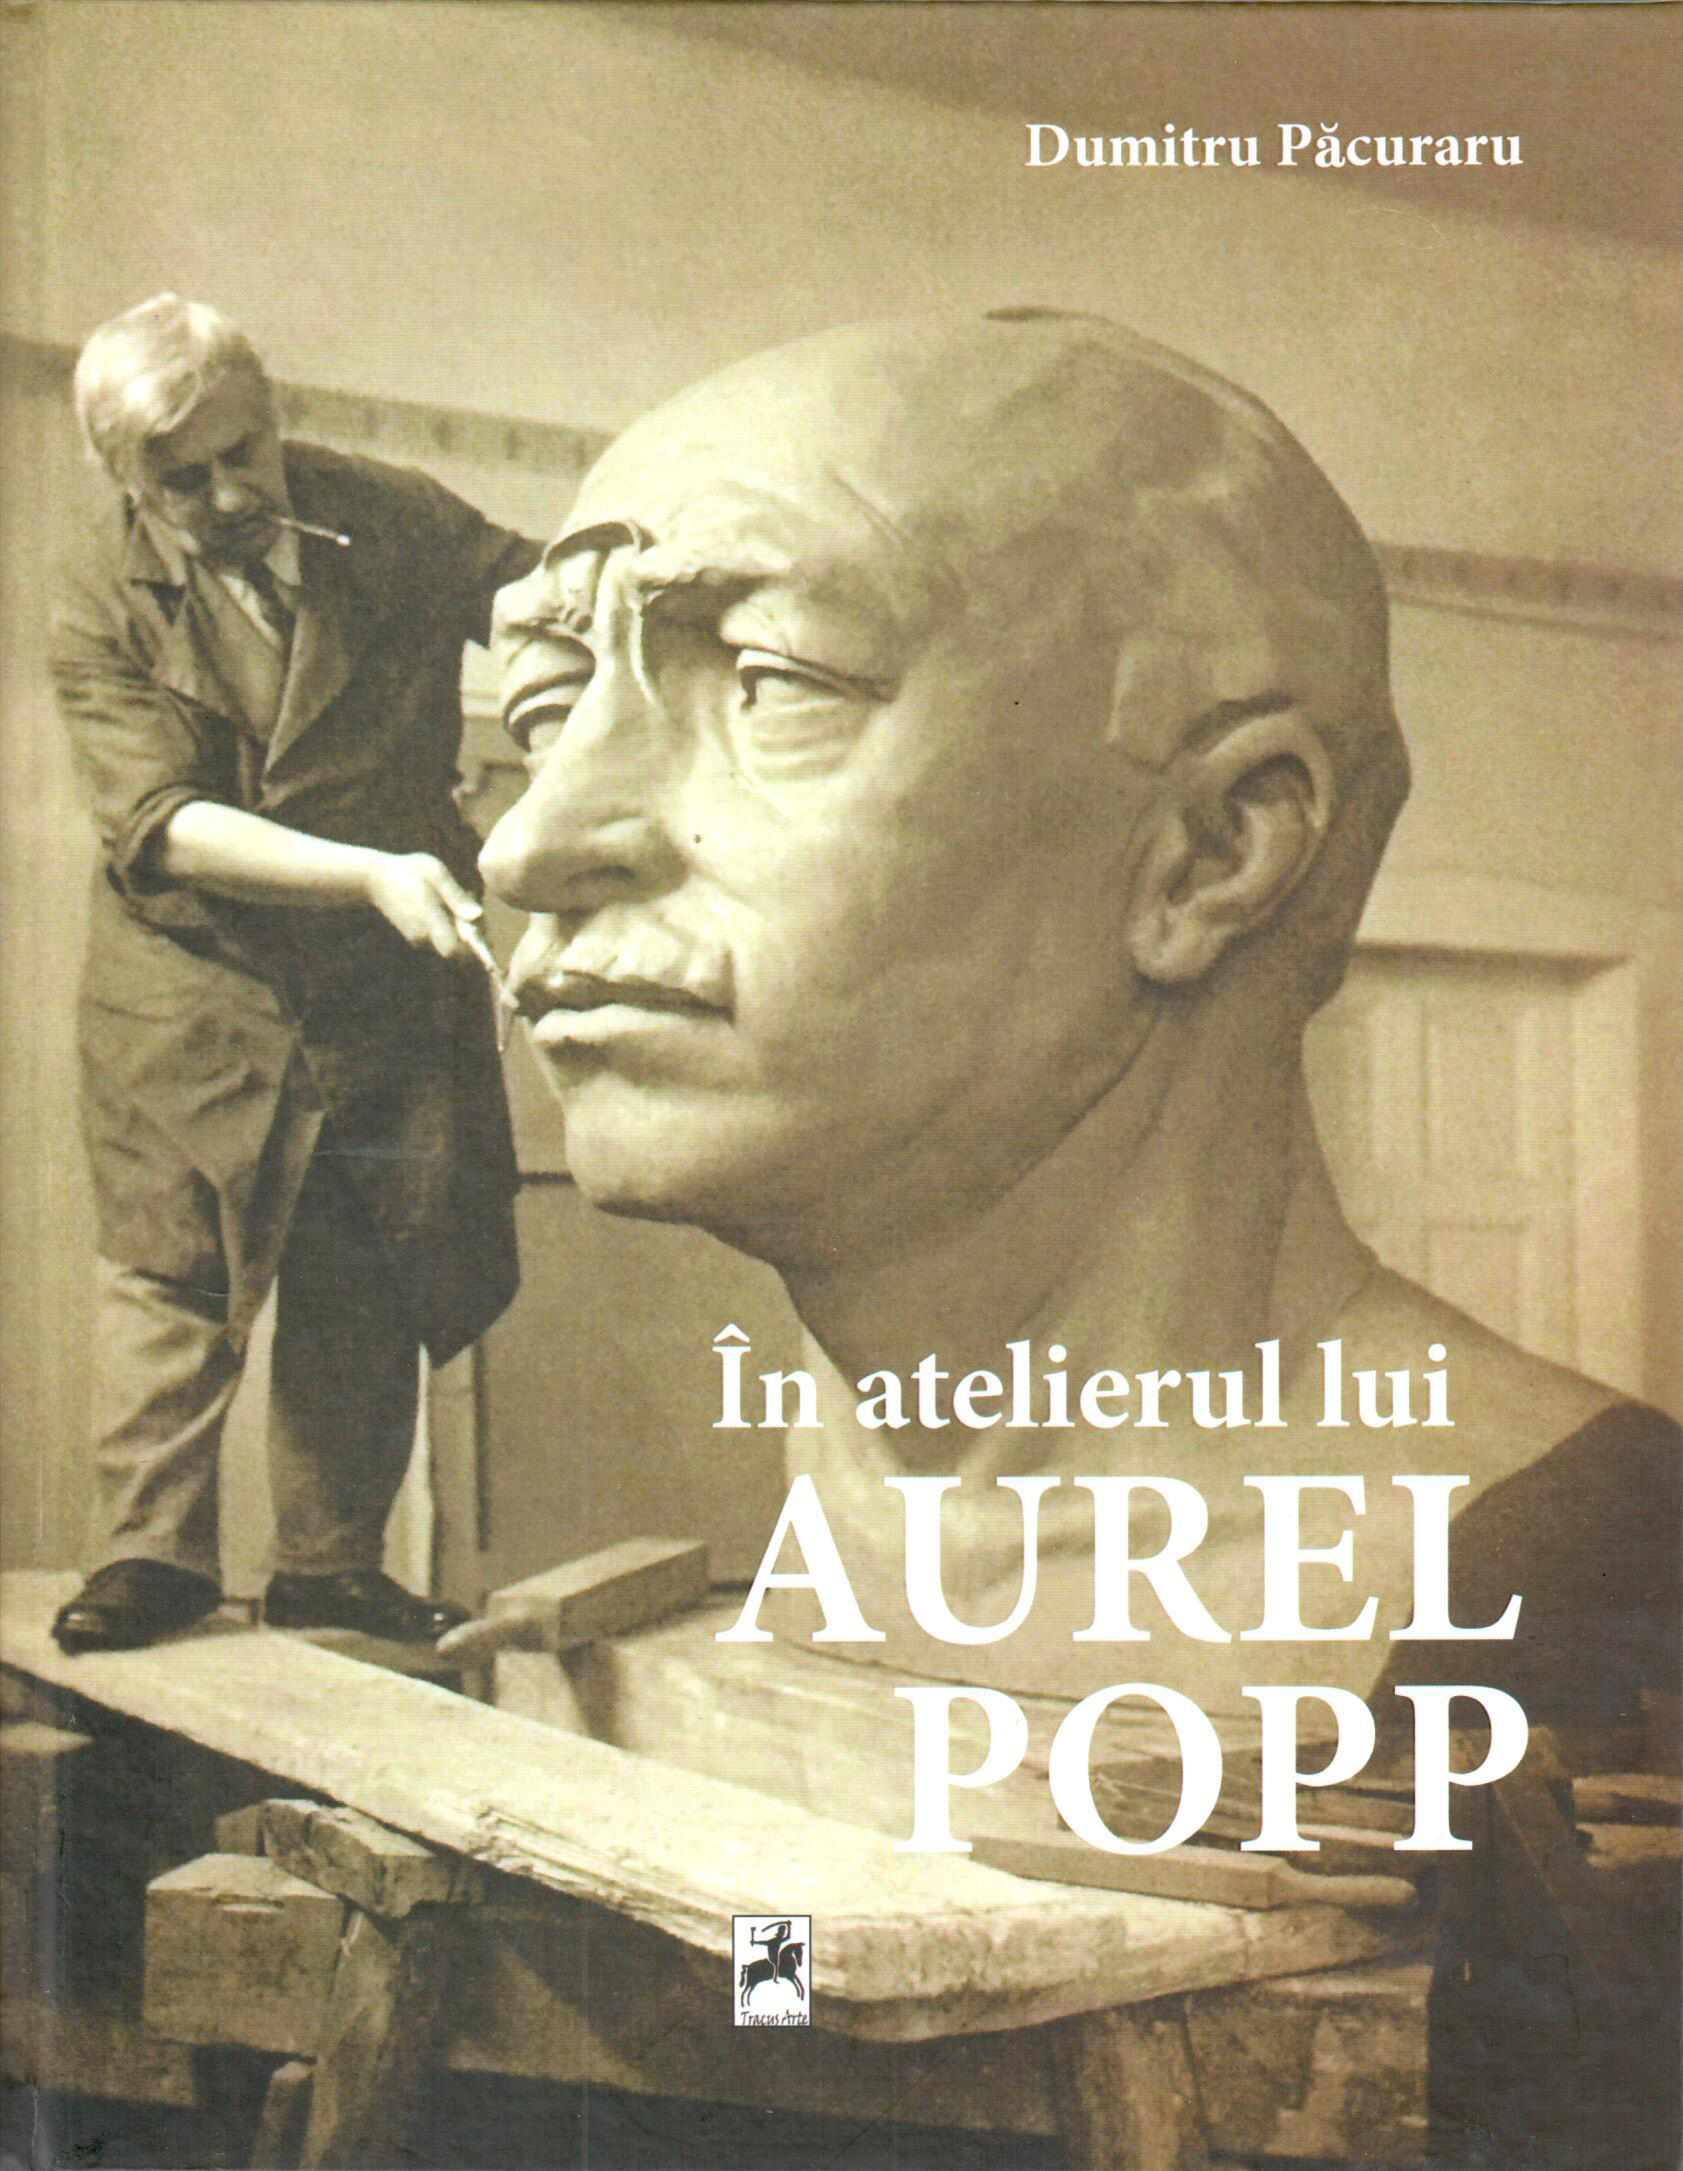 In atelierul lui Aurel Popp | Dumitru Pacuraru carturesti.ro poza noua